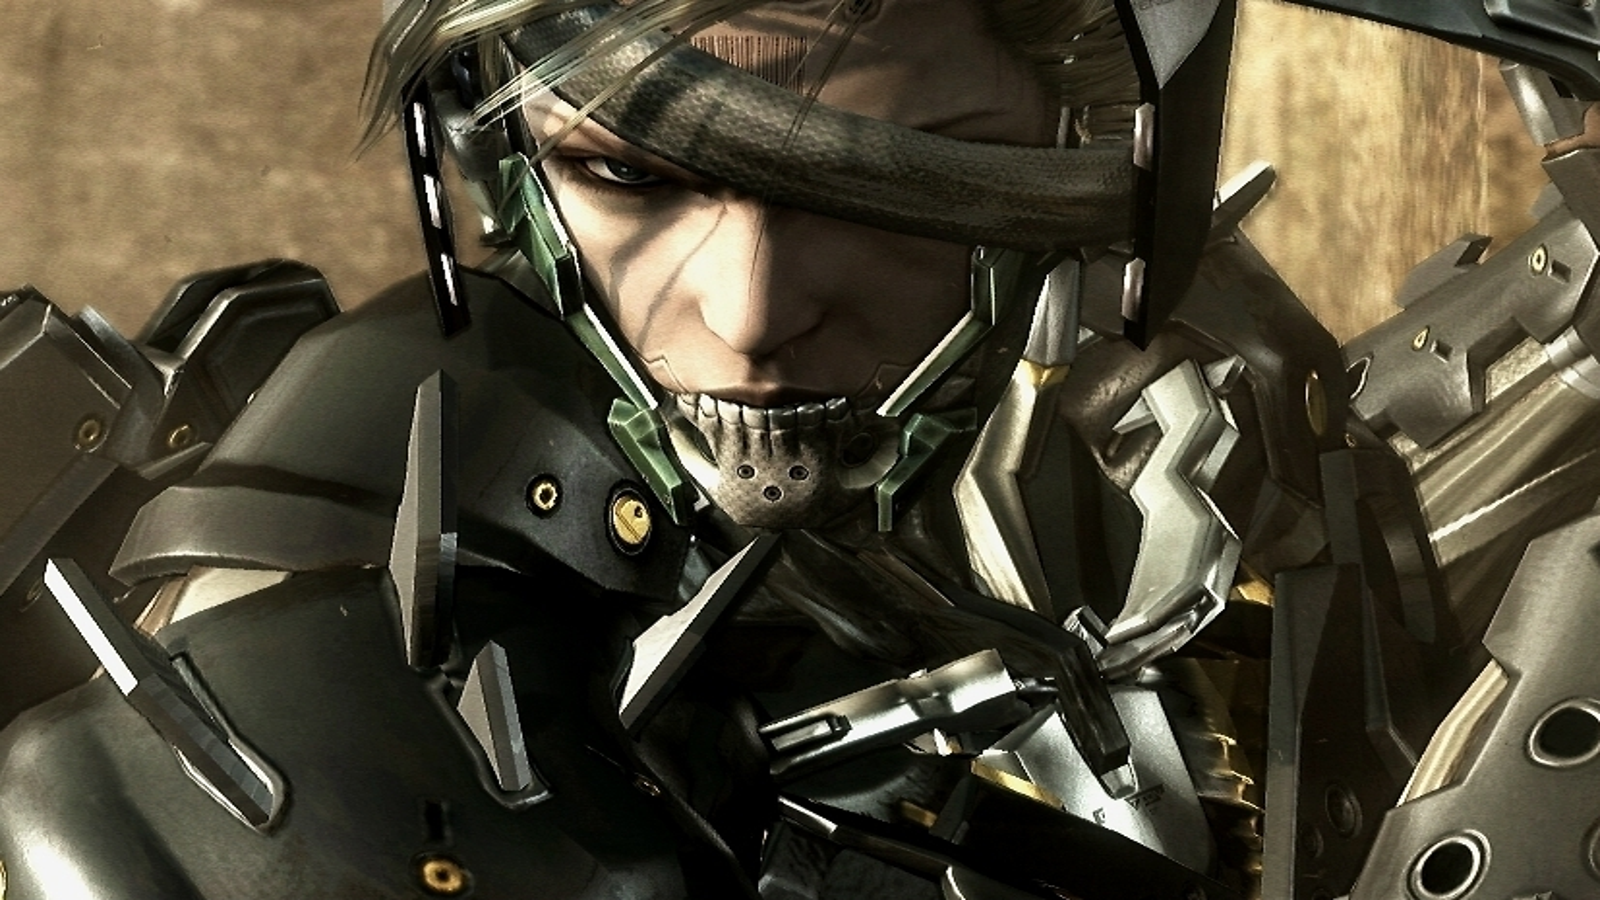 Metal Gear Rising: Revengeance Official Trailer 